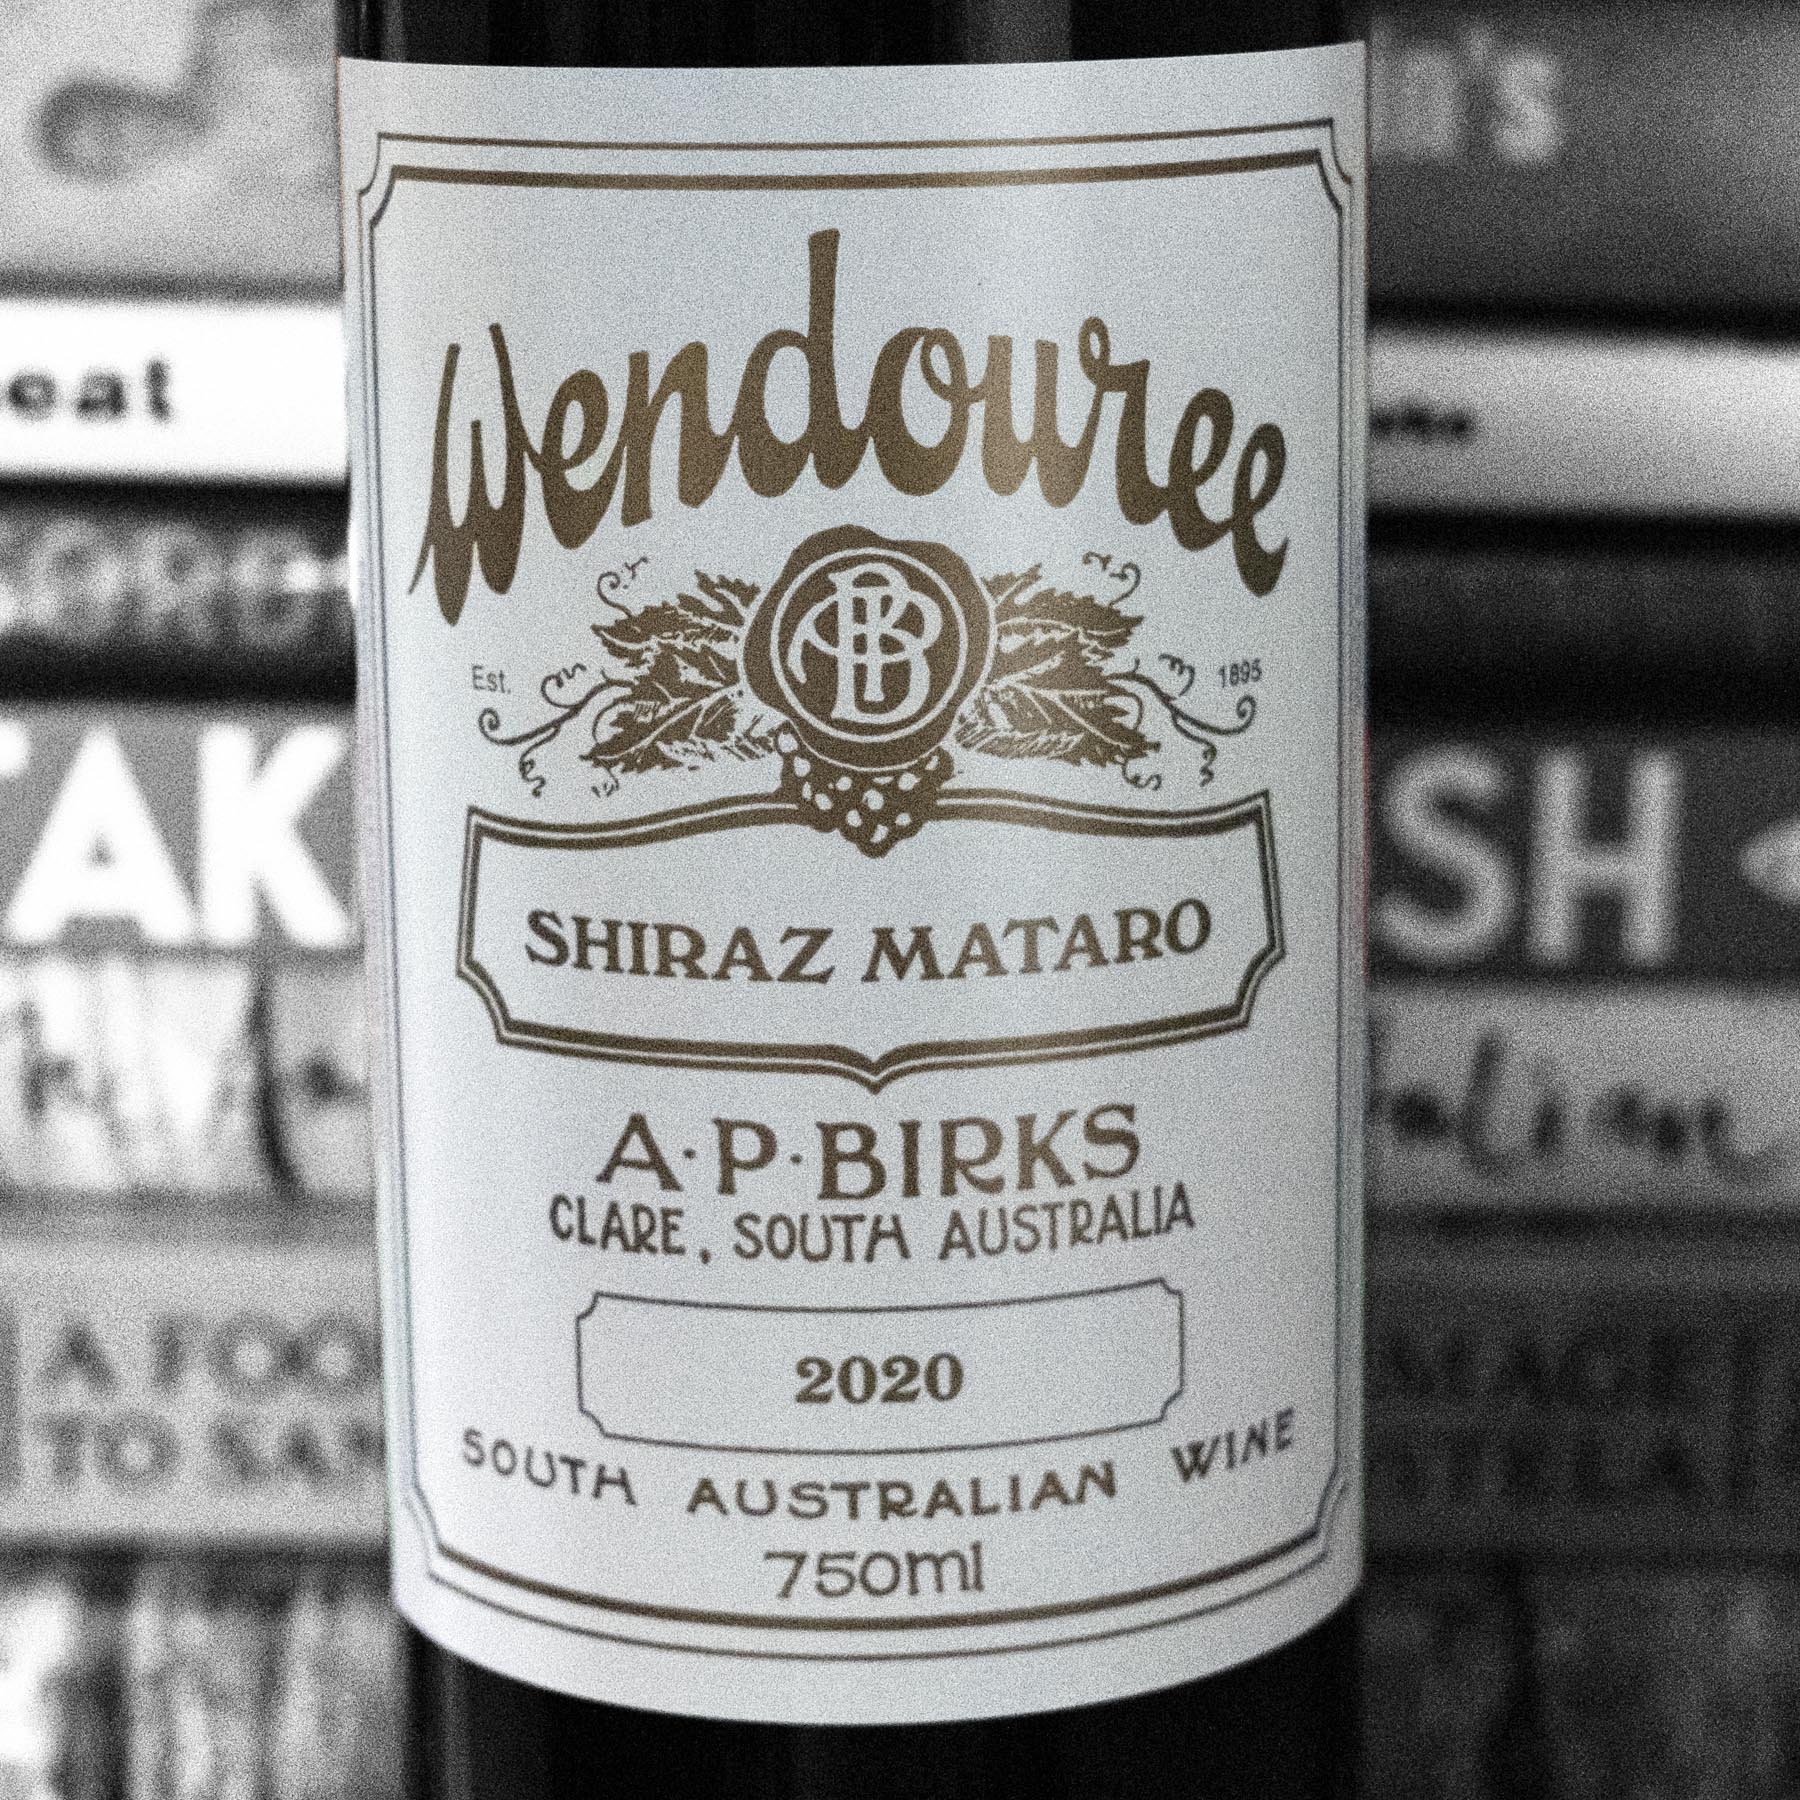 Wendouree Cellars [A.P. Birks] Shiraz Mataro 2020